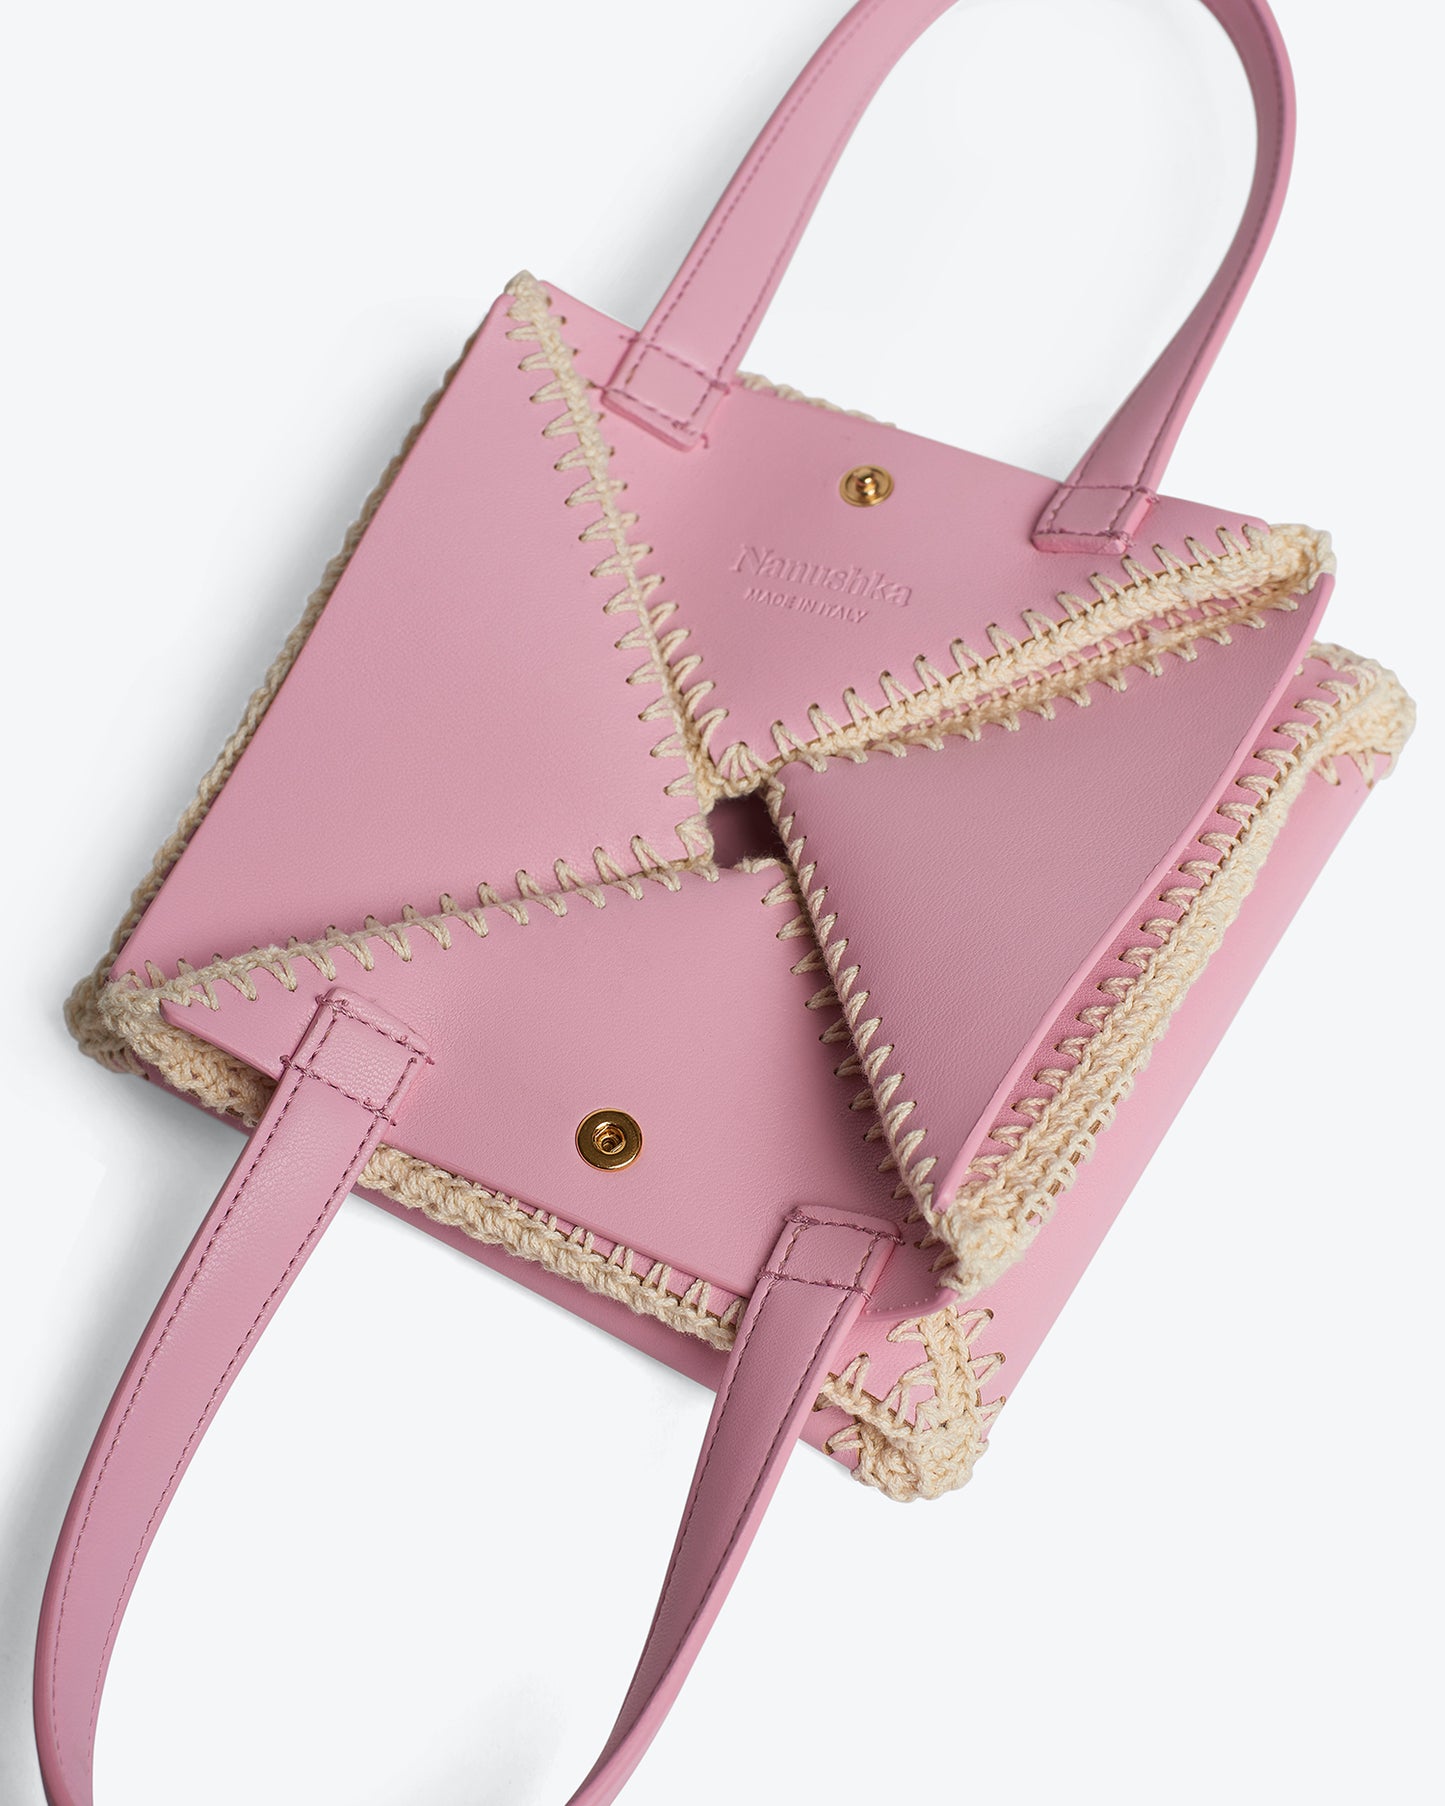 The Origami Mini - Alt-Nappa Patchwork Tote - Pink